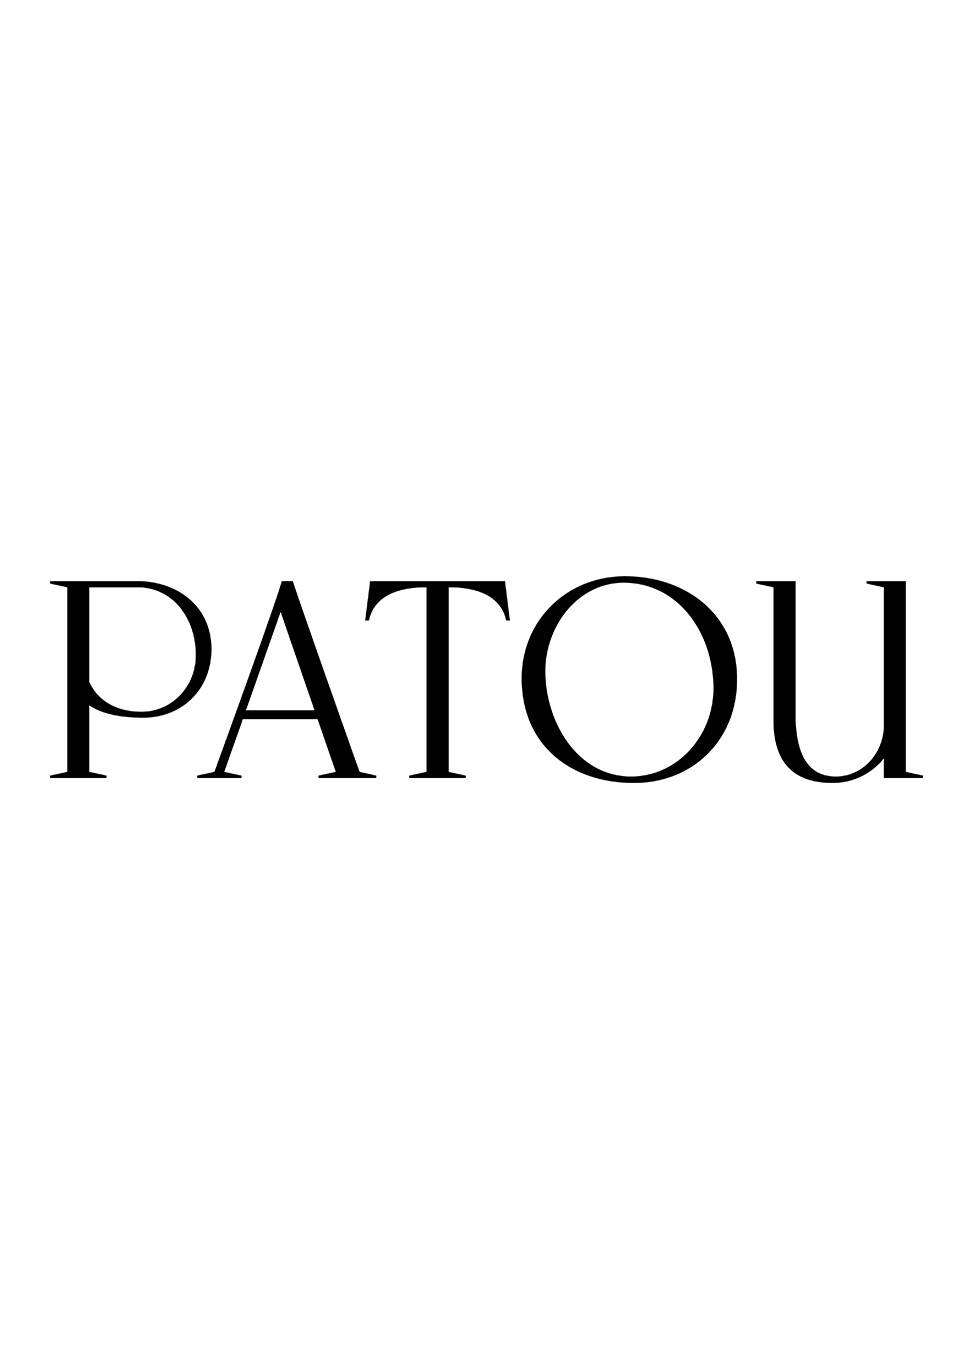 Patou - Fashion & Leather Goods - LVMH